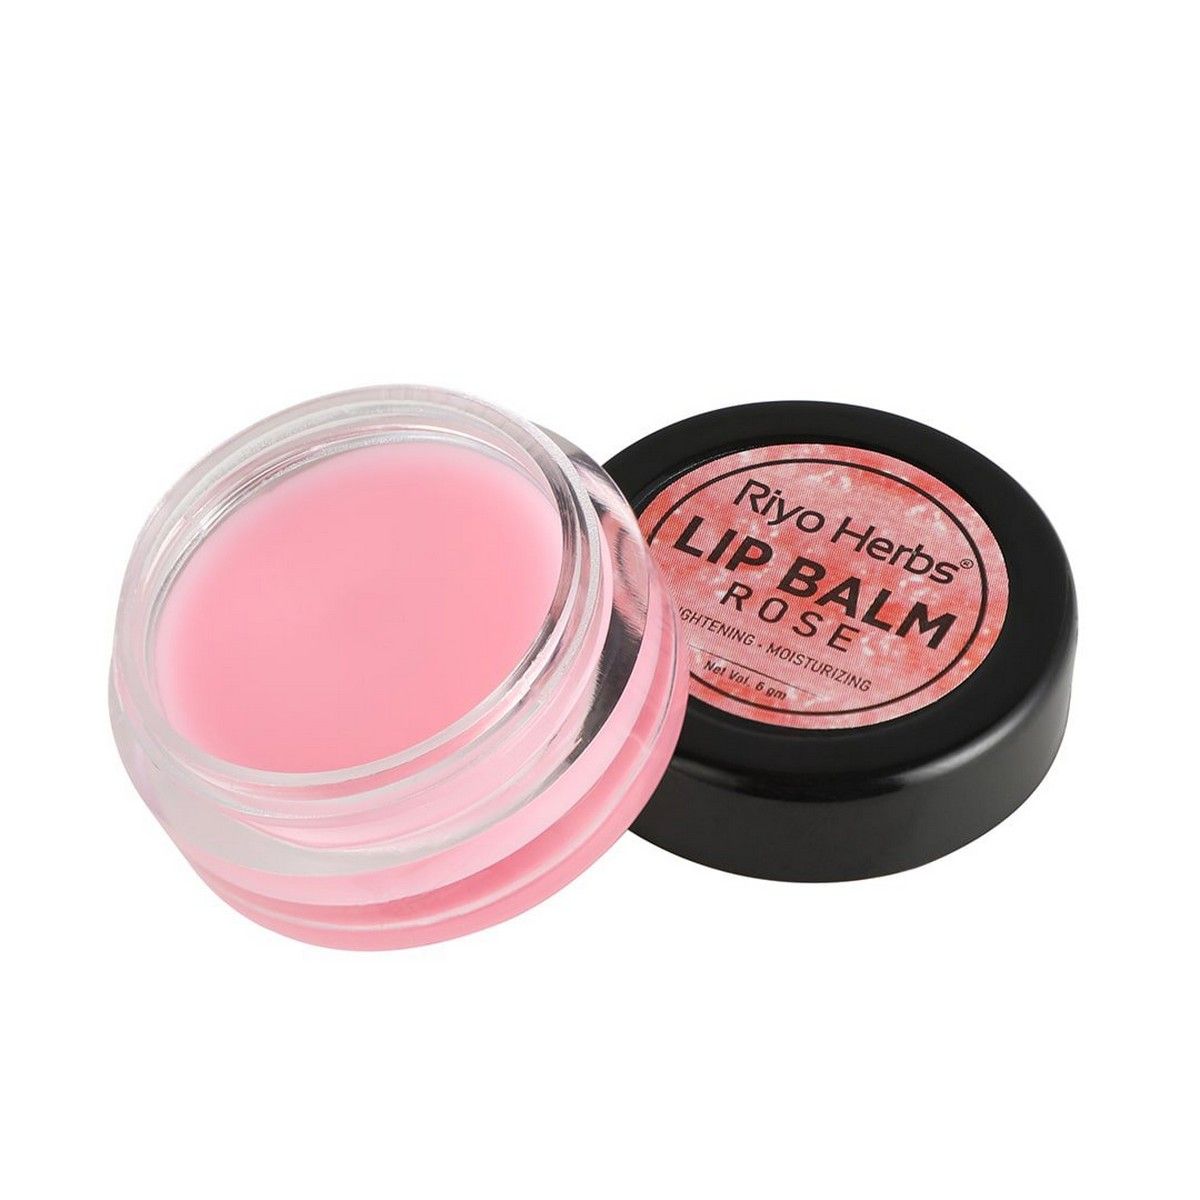 Buy Riyo Herbs Rose Lip Balm With Shea Butter & Beeswax for Help moisture & lighten dark lips, 6 gm - Purplle